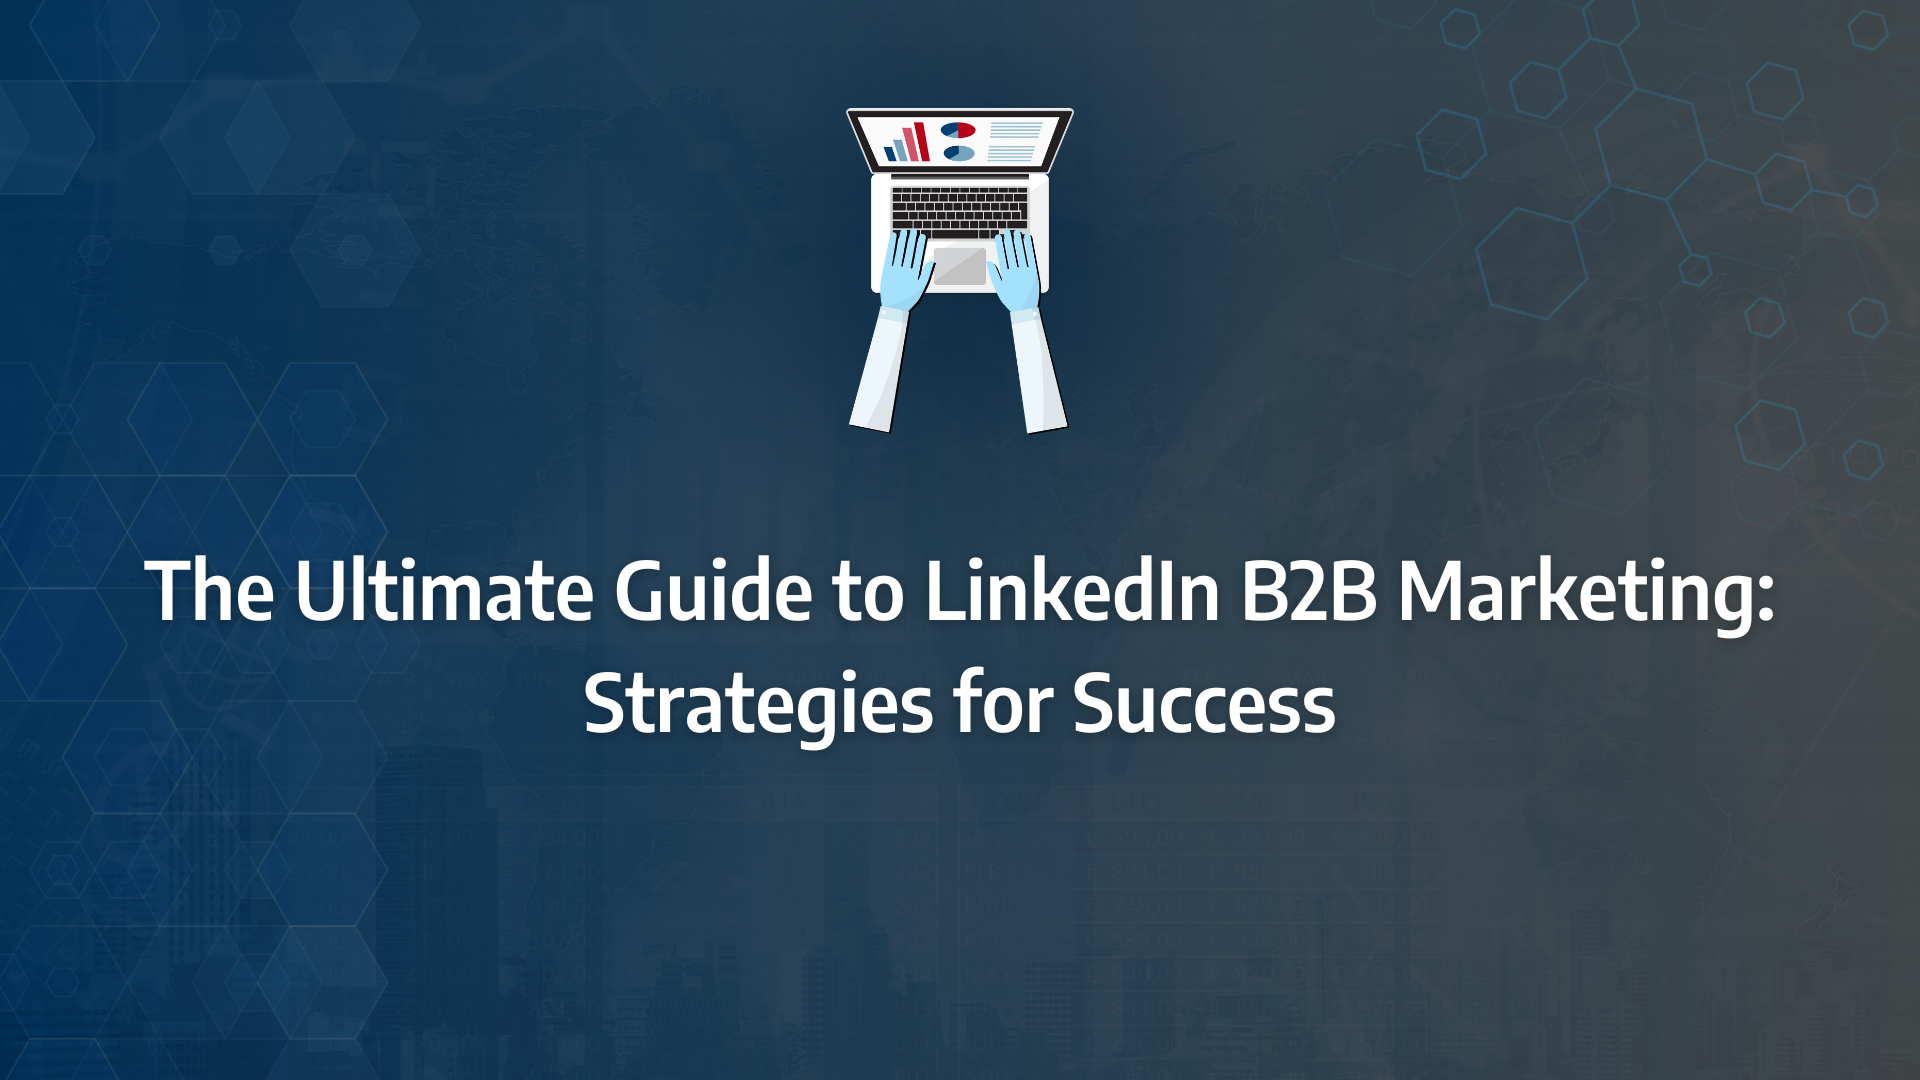 the ultimate guide to linkedin b2b marketing incorporating linkedin marketing, thought leadership, linkedin sales navigator, linkedin profile